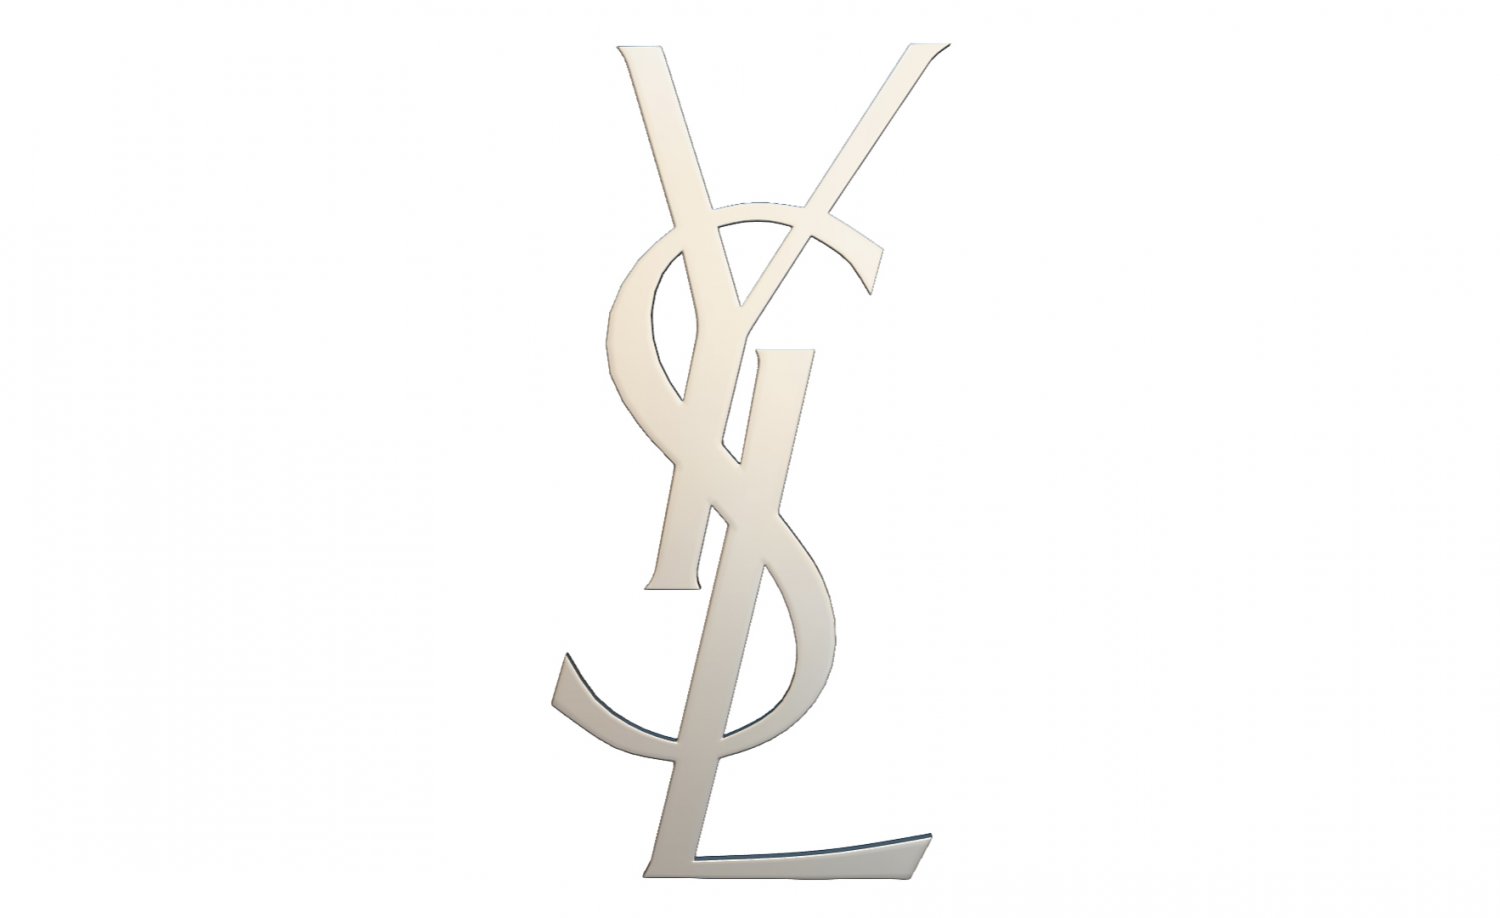 223 Ysl Logo Images, Stock Photos, 3D objects, & Vectors